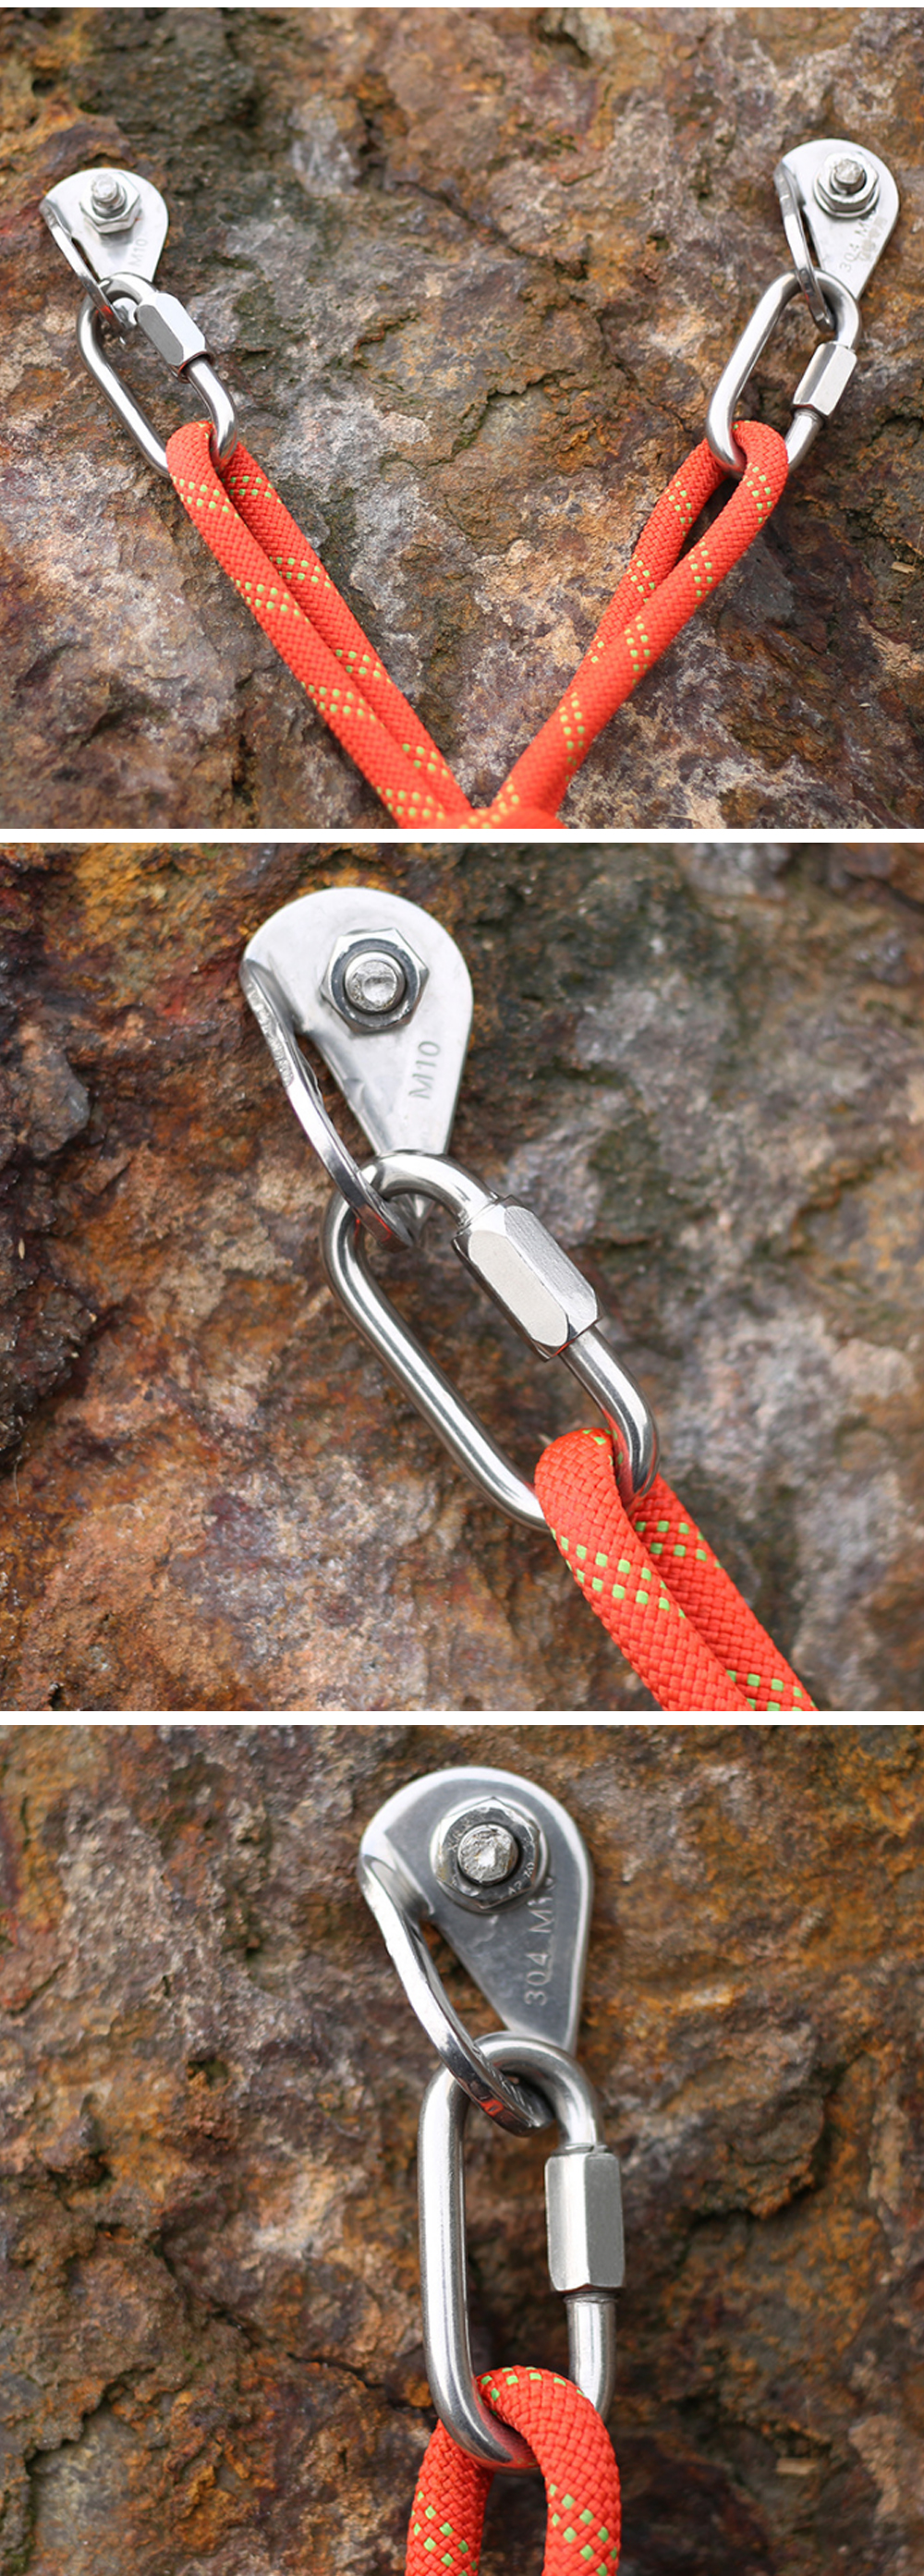 XINDA-12182228KN-Climbing-Carabiner-Mountain-Safety-Master-Screw-Lock-D-Shaped-Buckle-Outdoor-Hiking-1740011-2